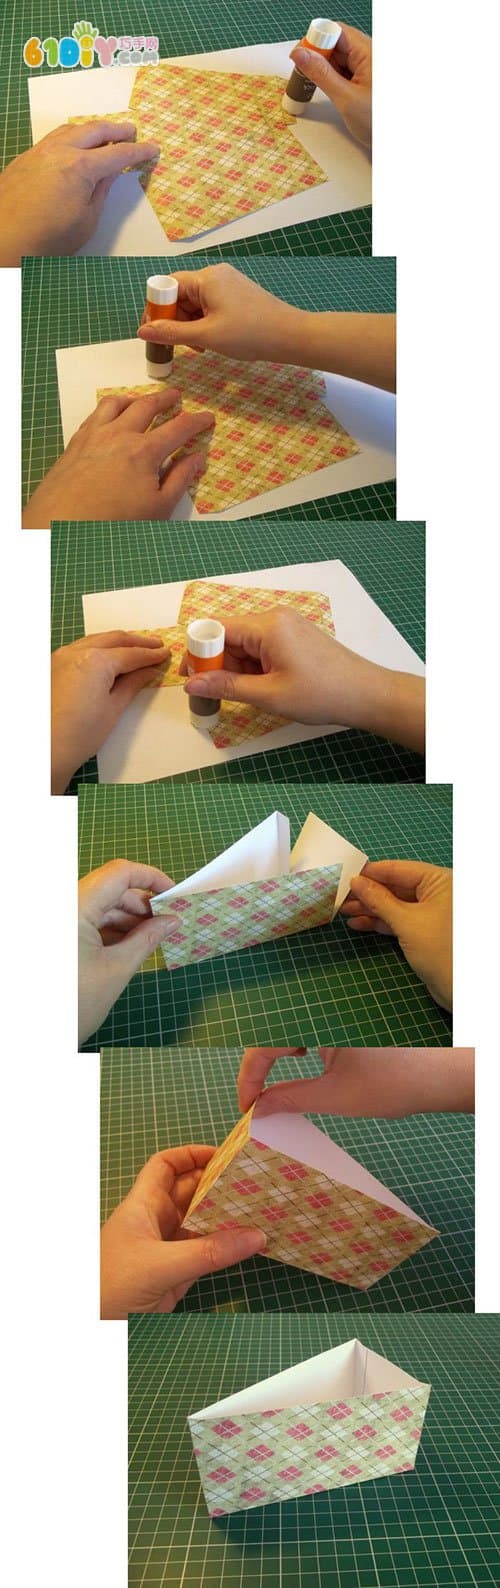 Triangle cake shaped carton making process